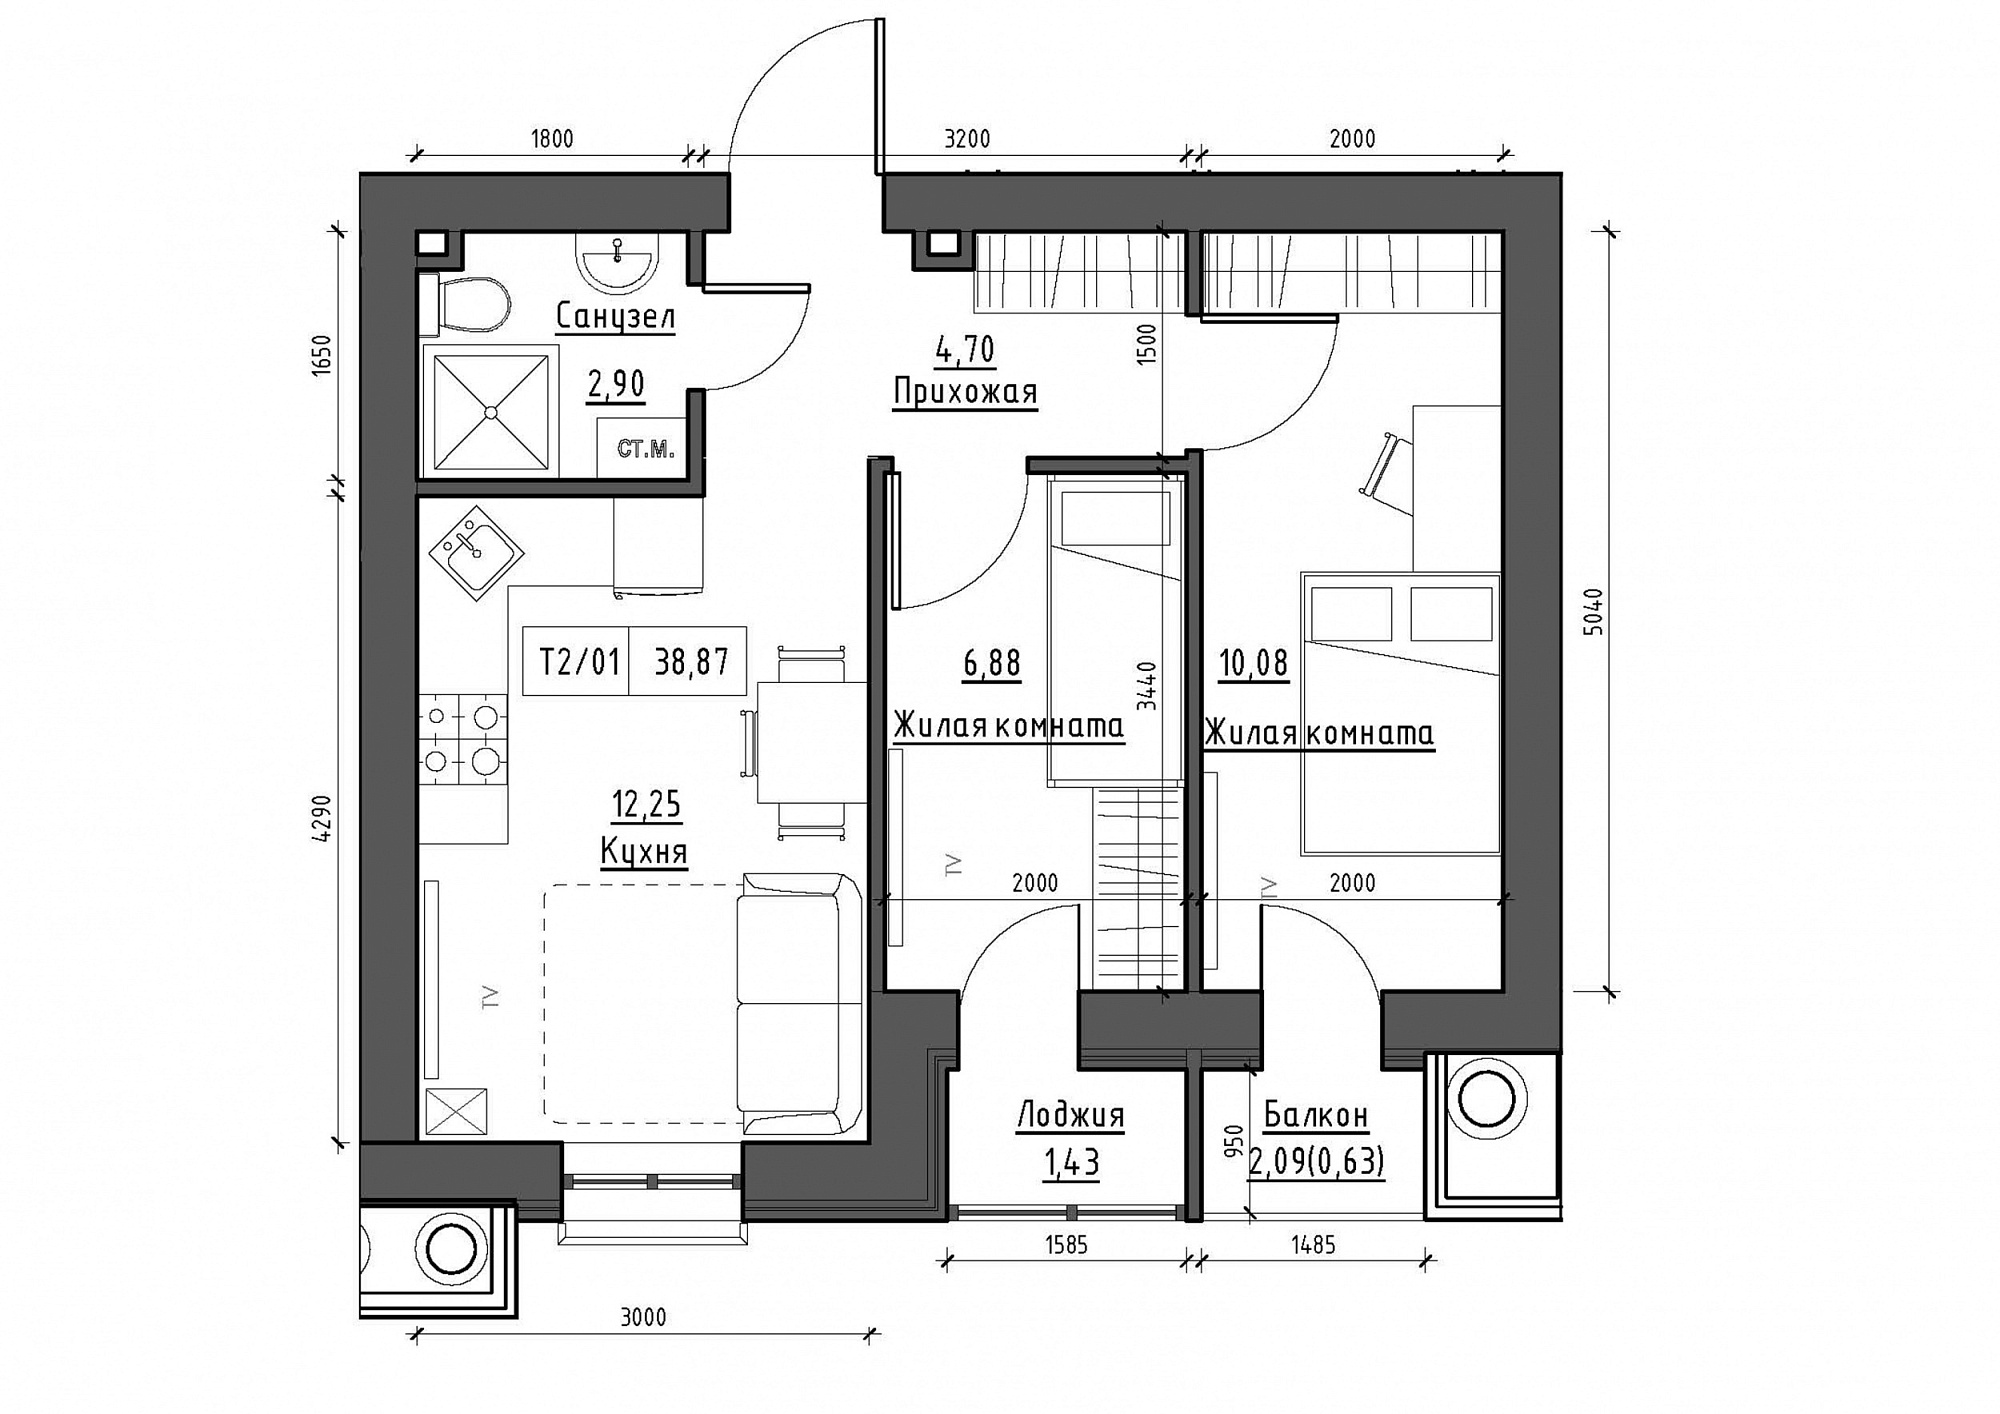 Planning 2-rm flats area 38.87m2, KS-012-02/0005.